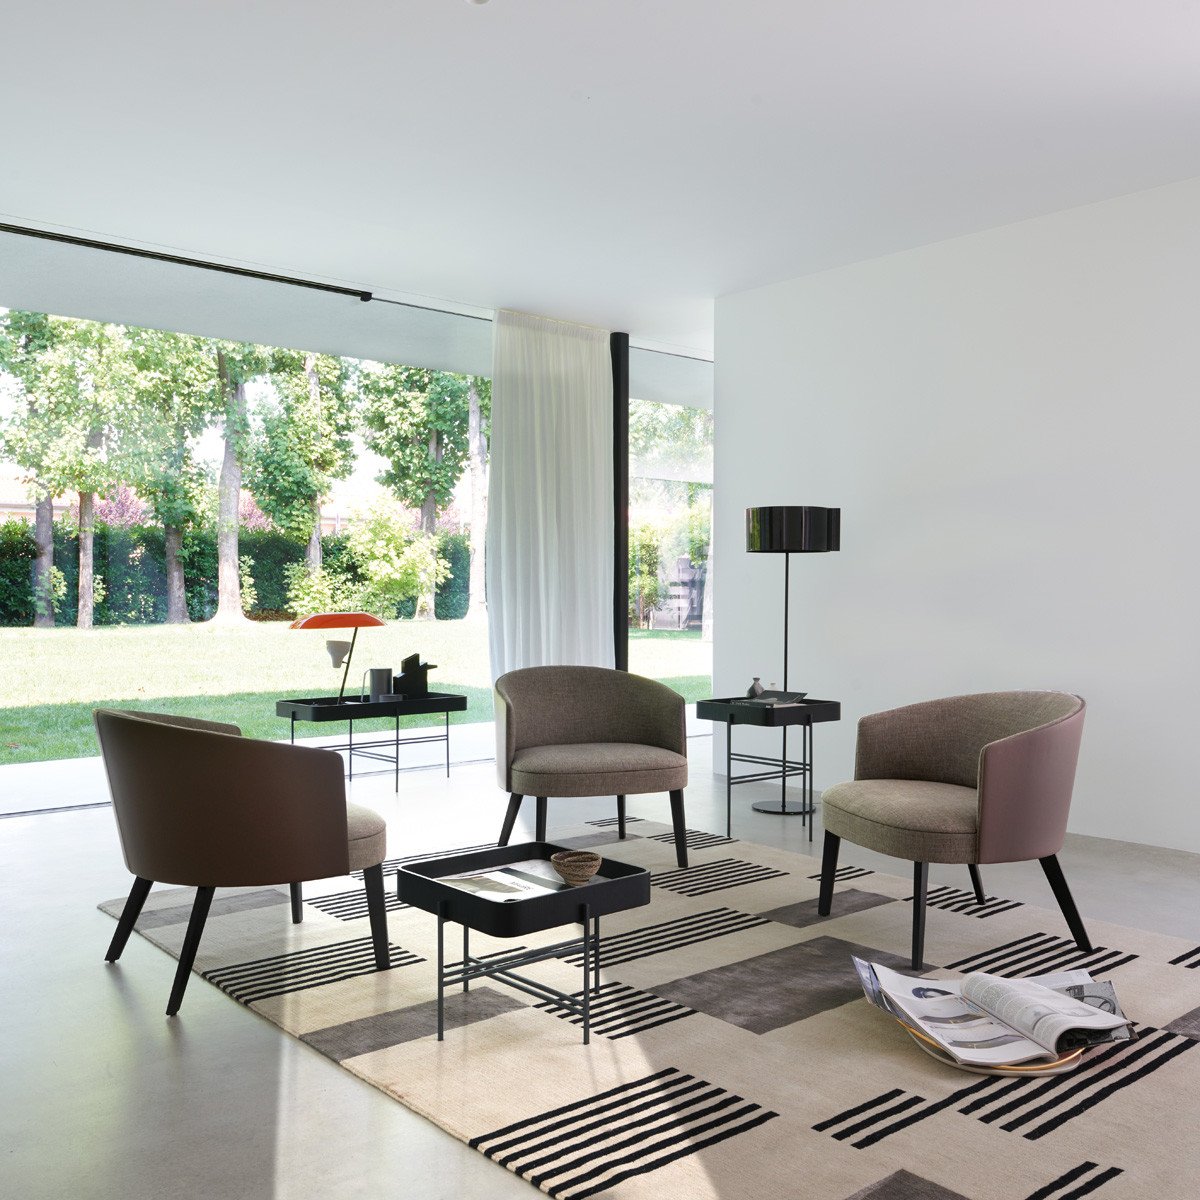 Lena Lounge Chair from Potocco, designed by Gabriele & Oscar Buratti